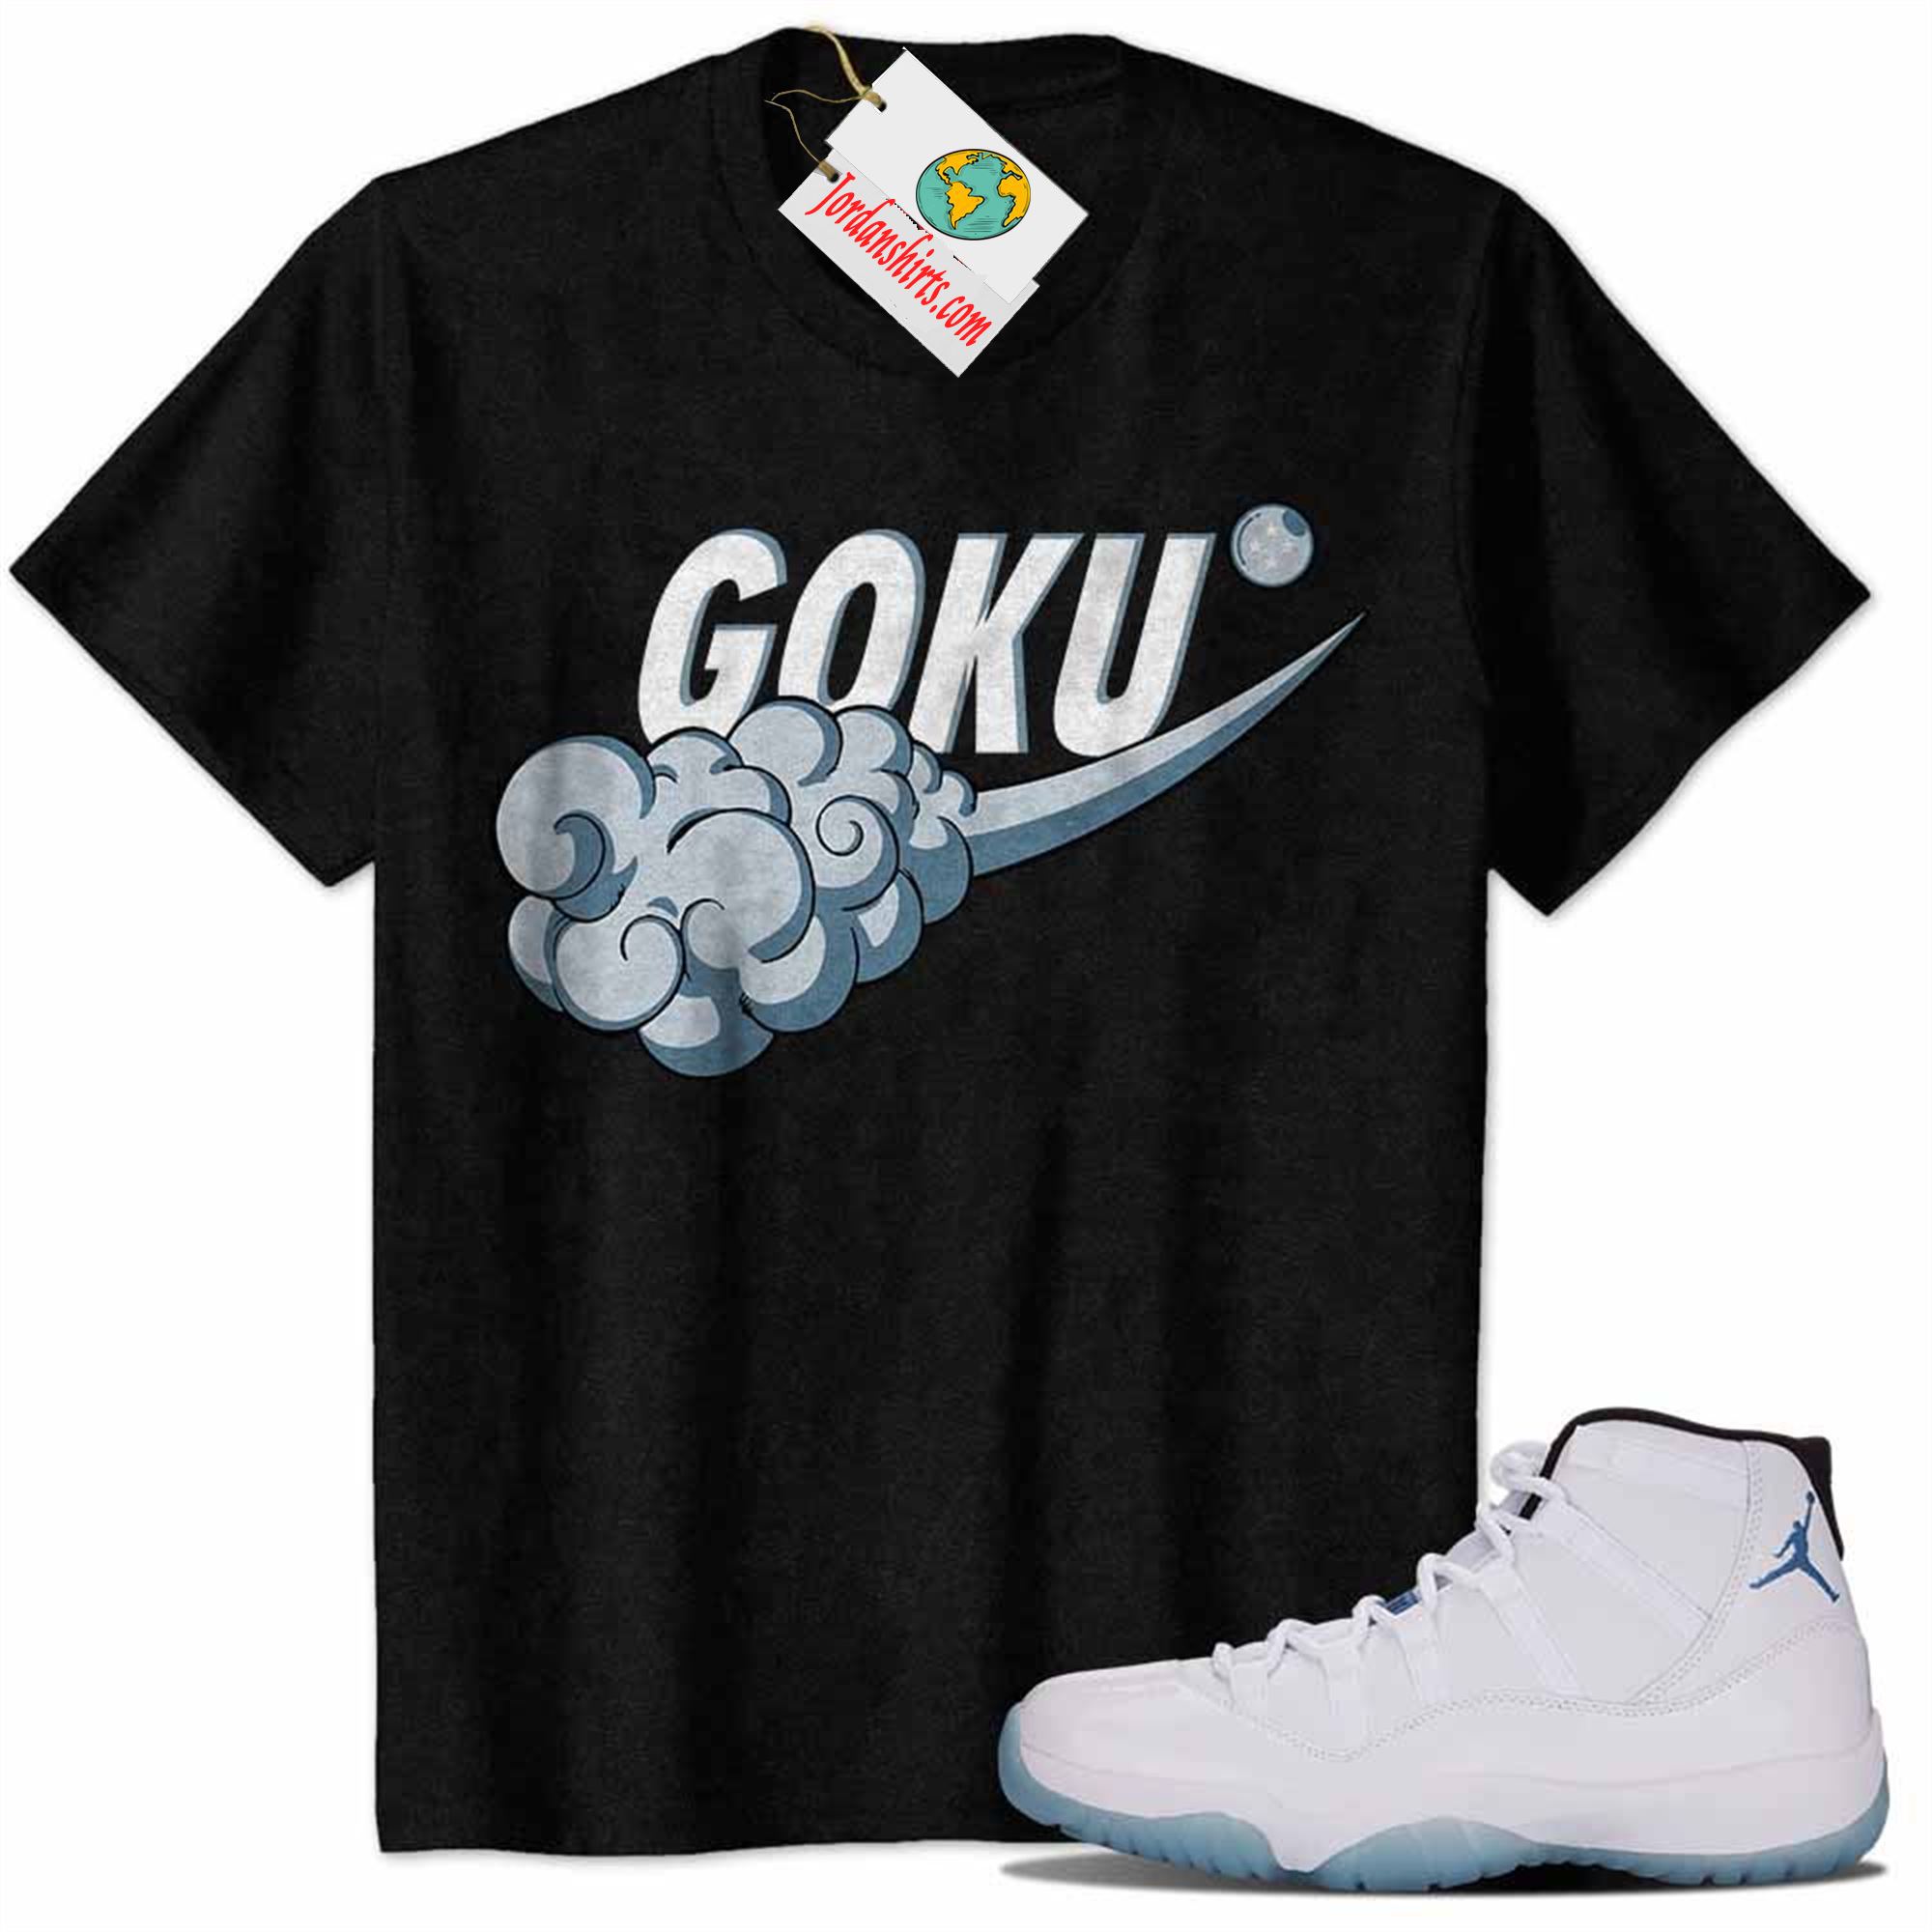 Jordan 11 Shirt, Dragonball Z Nike Goku Nimbus Cloud Black Air Jordan 11 Legend Blue 11s Plus Size Up To 5xl